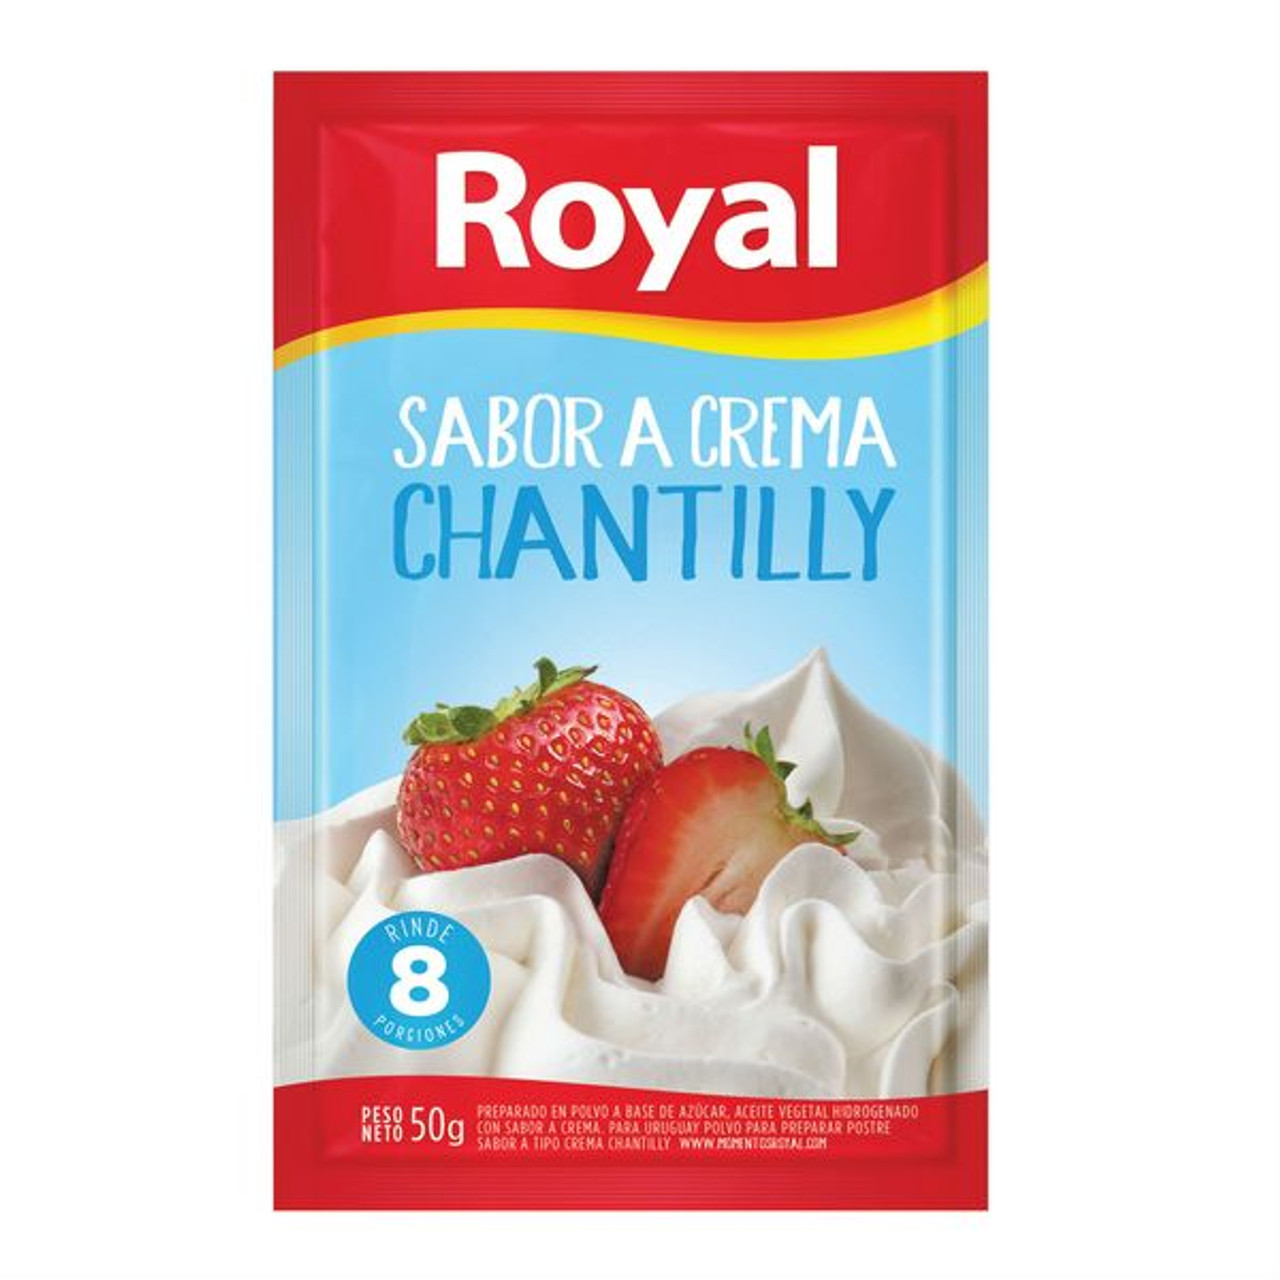 Royal Sabor Crema Chantilly Ready to Make Chantilly Cream, 8 servings per  pouch, 50 g / 1.76 oz pouch